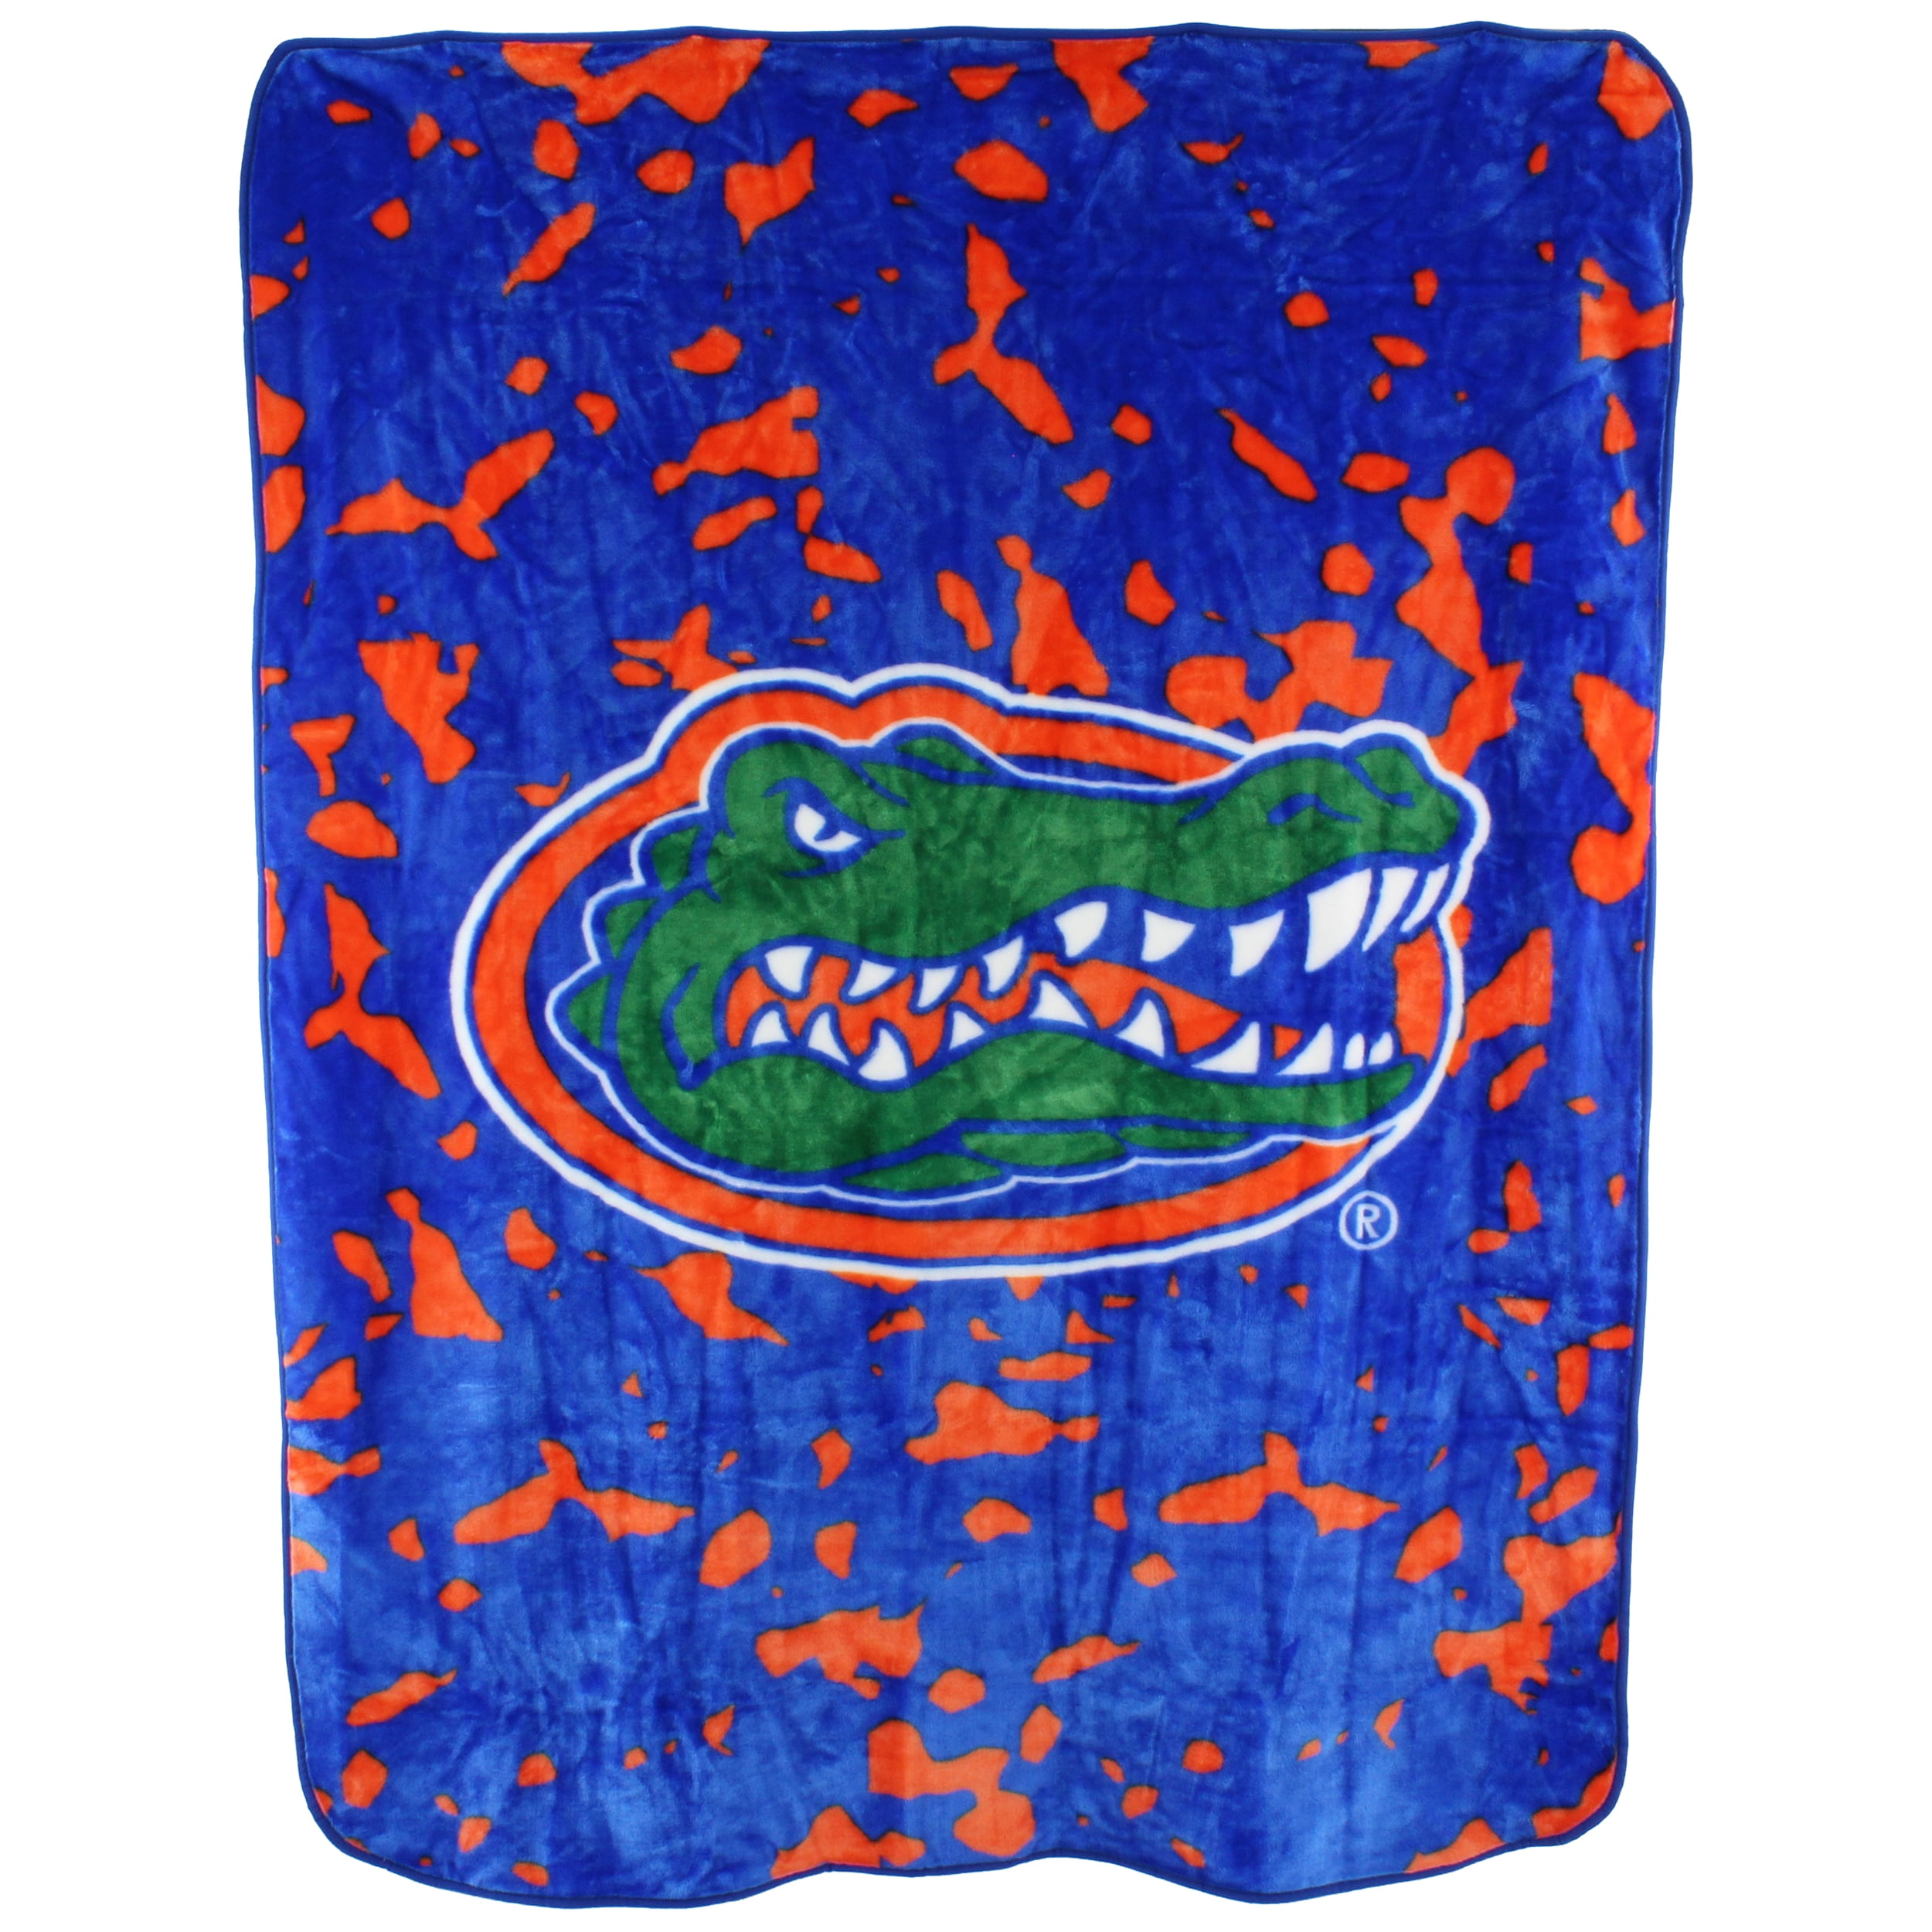 NCAA Collegiate Section Super Soft Plush Throw Blanket